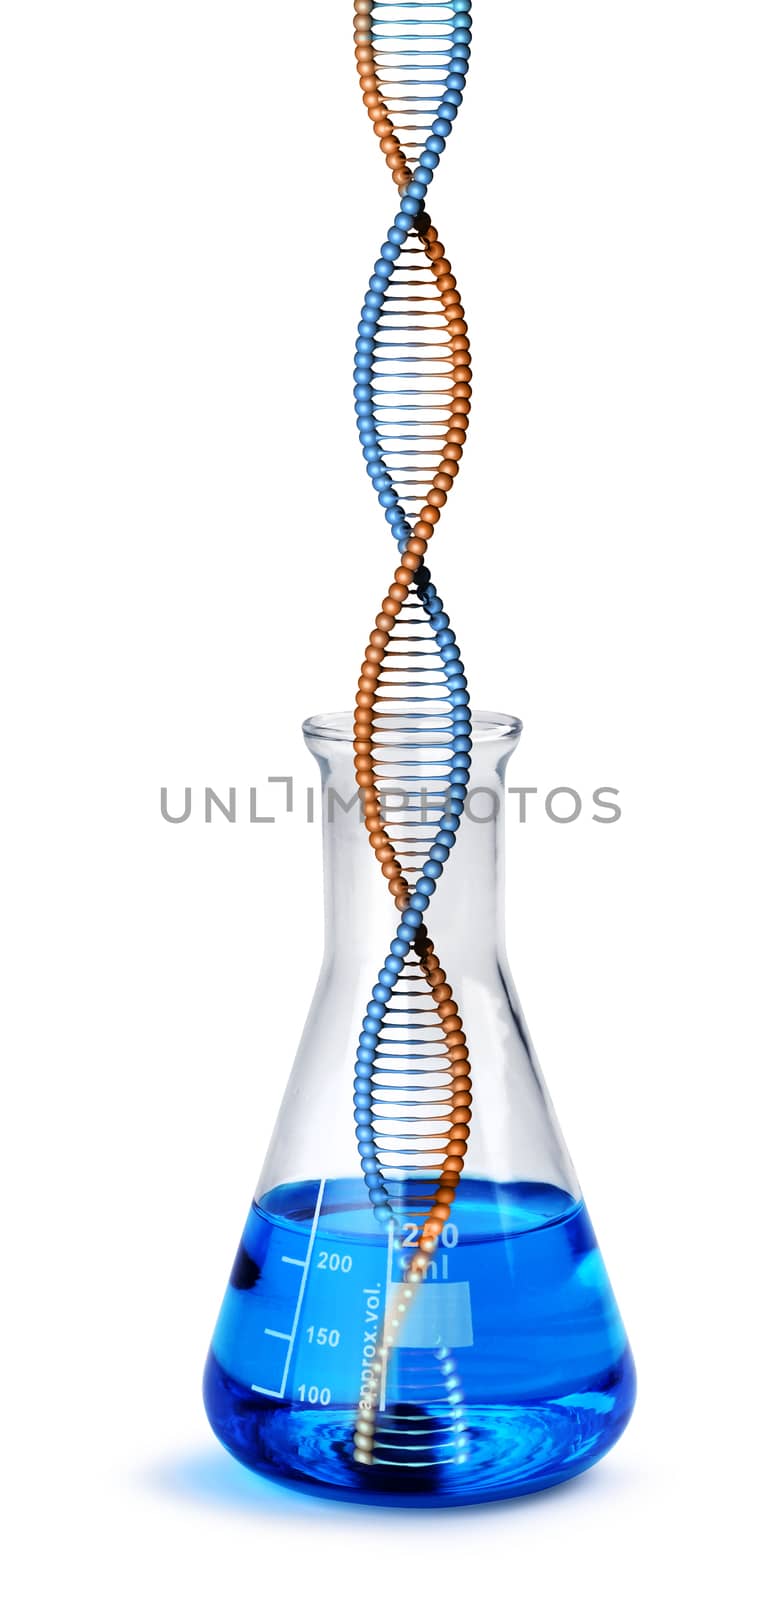 DNA helix in laboratory glass beaker by anterovium